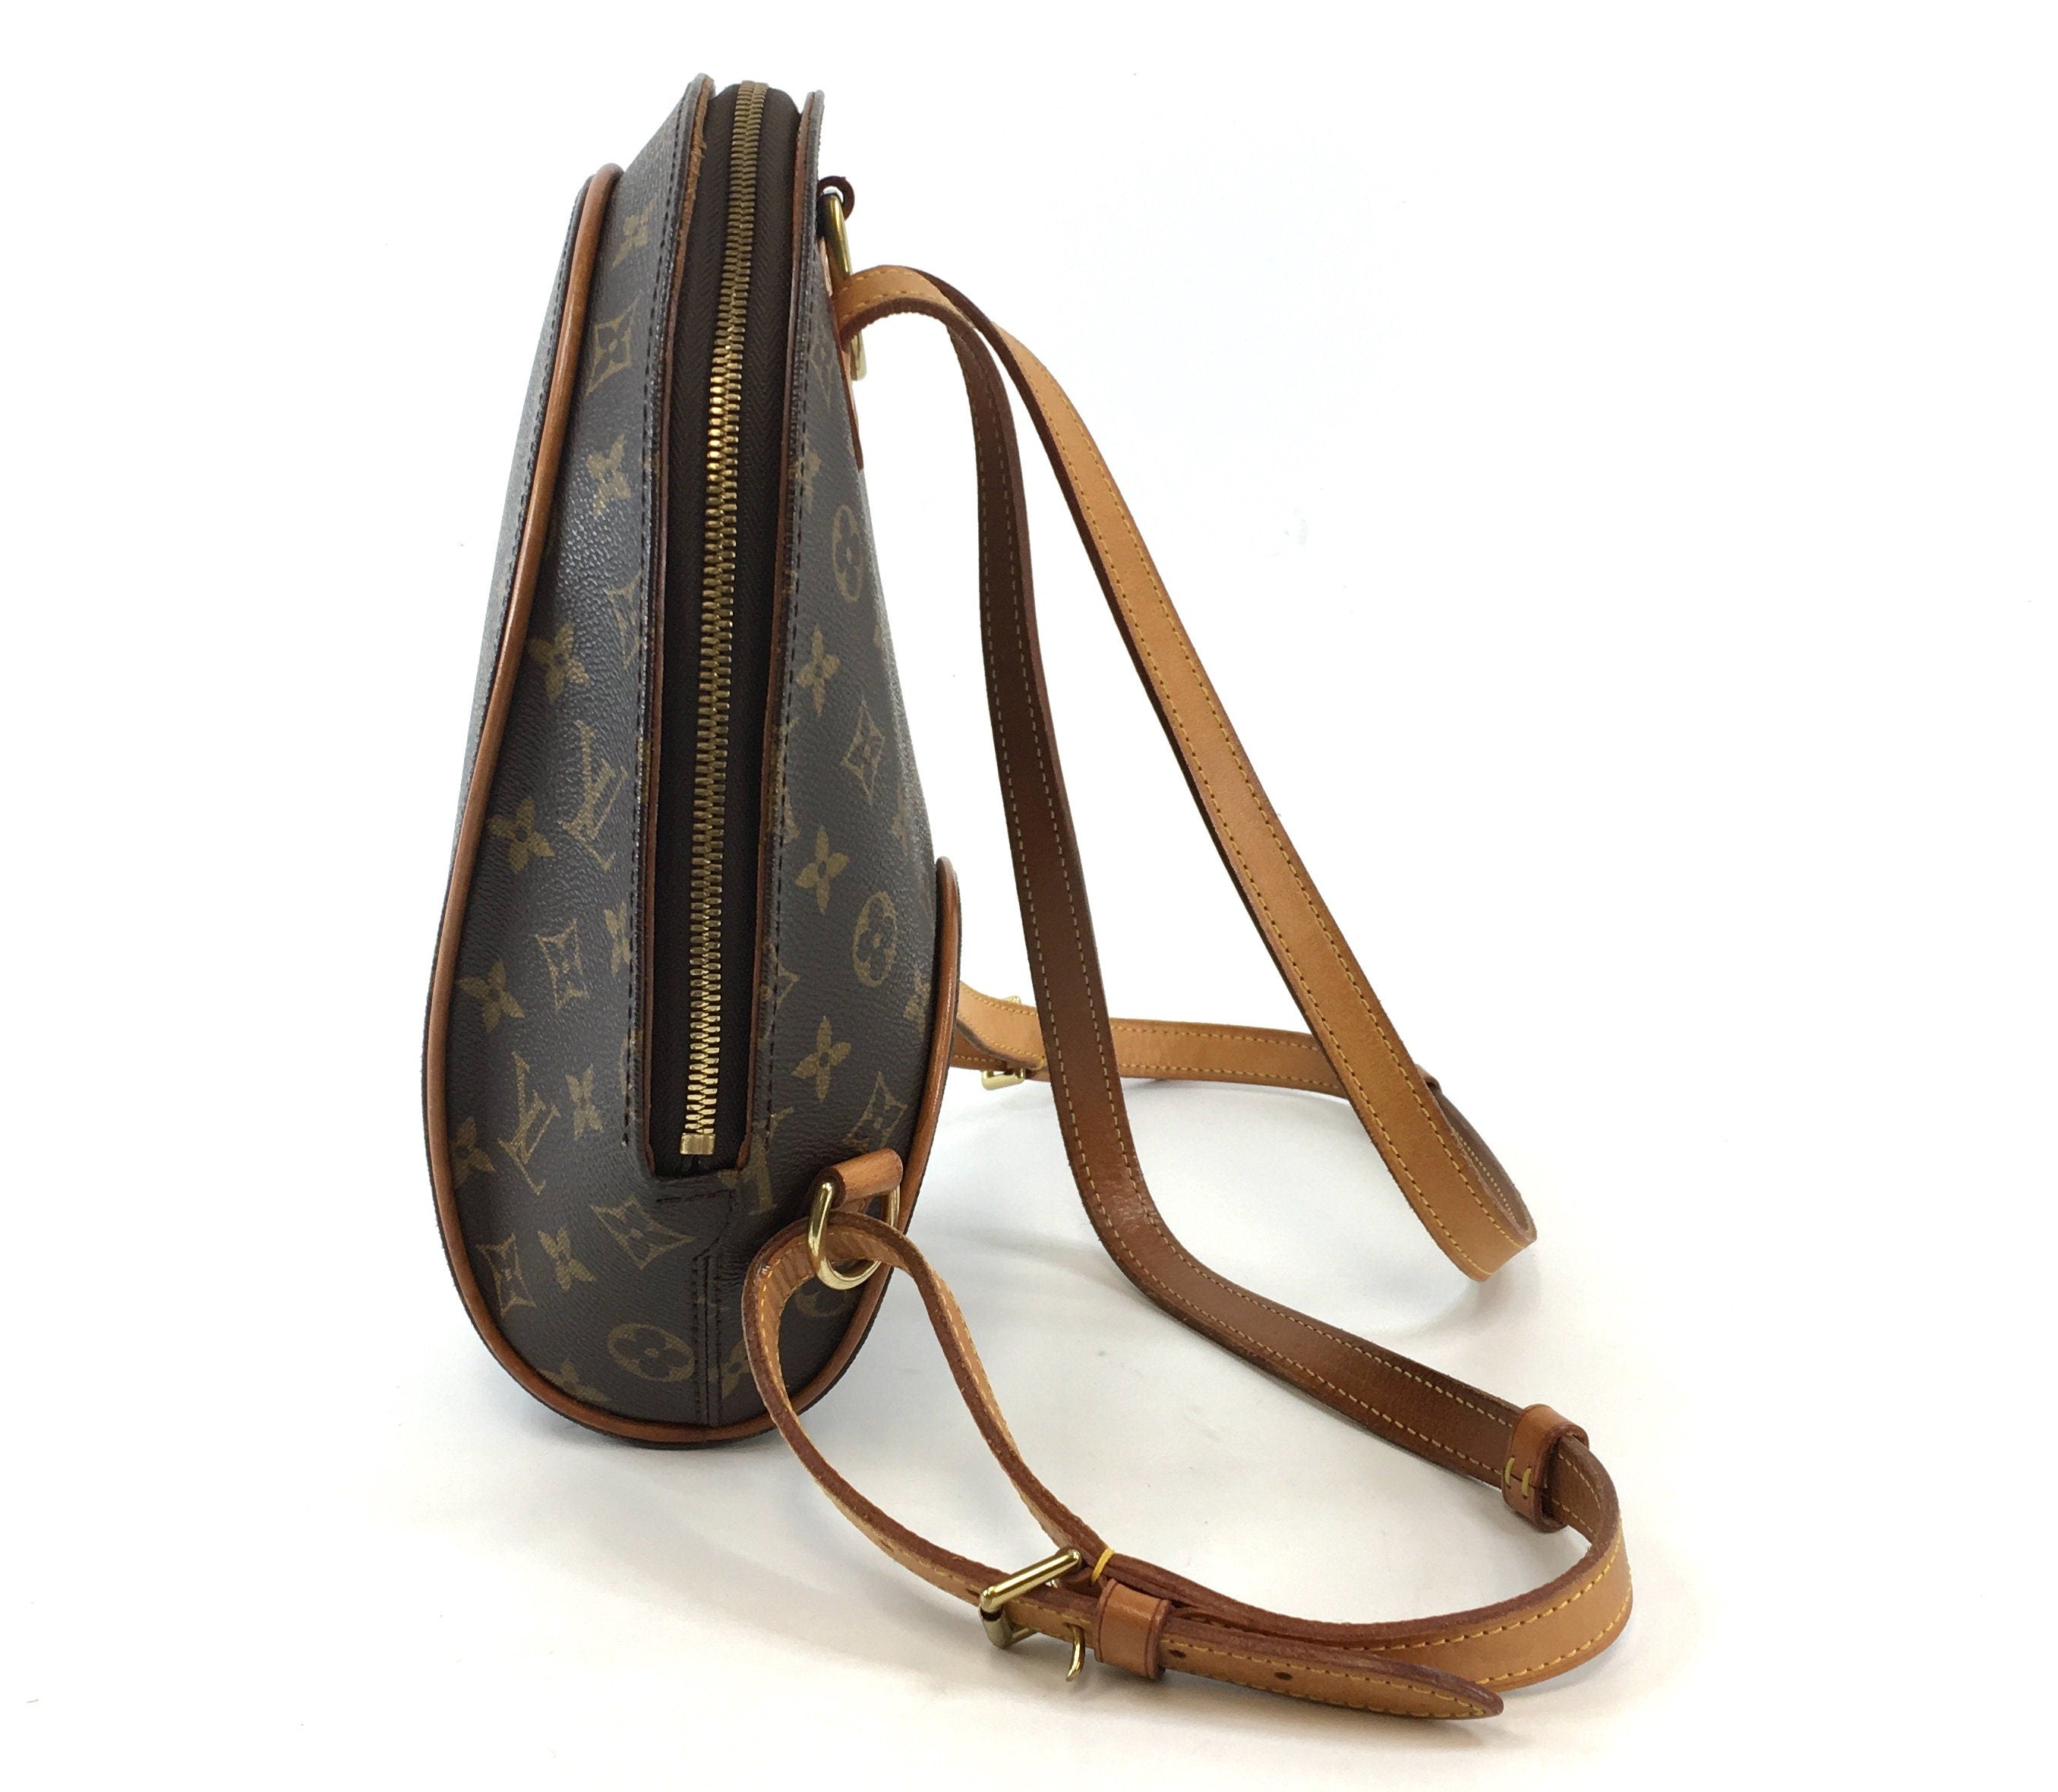 LV Louis Vuitton Ellipse Backpack Turtle Shell Handbag Sac